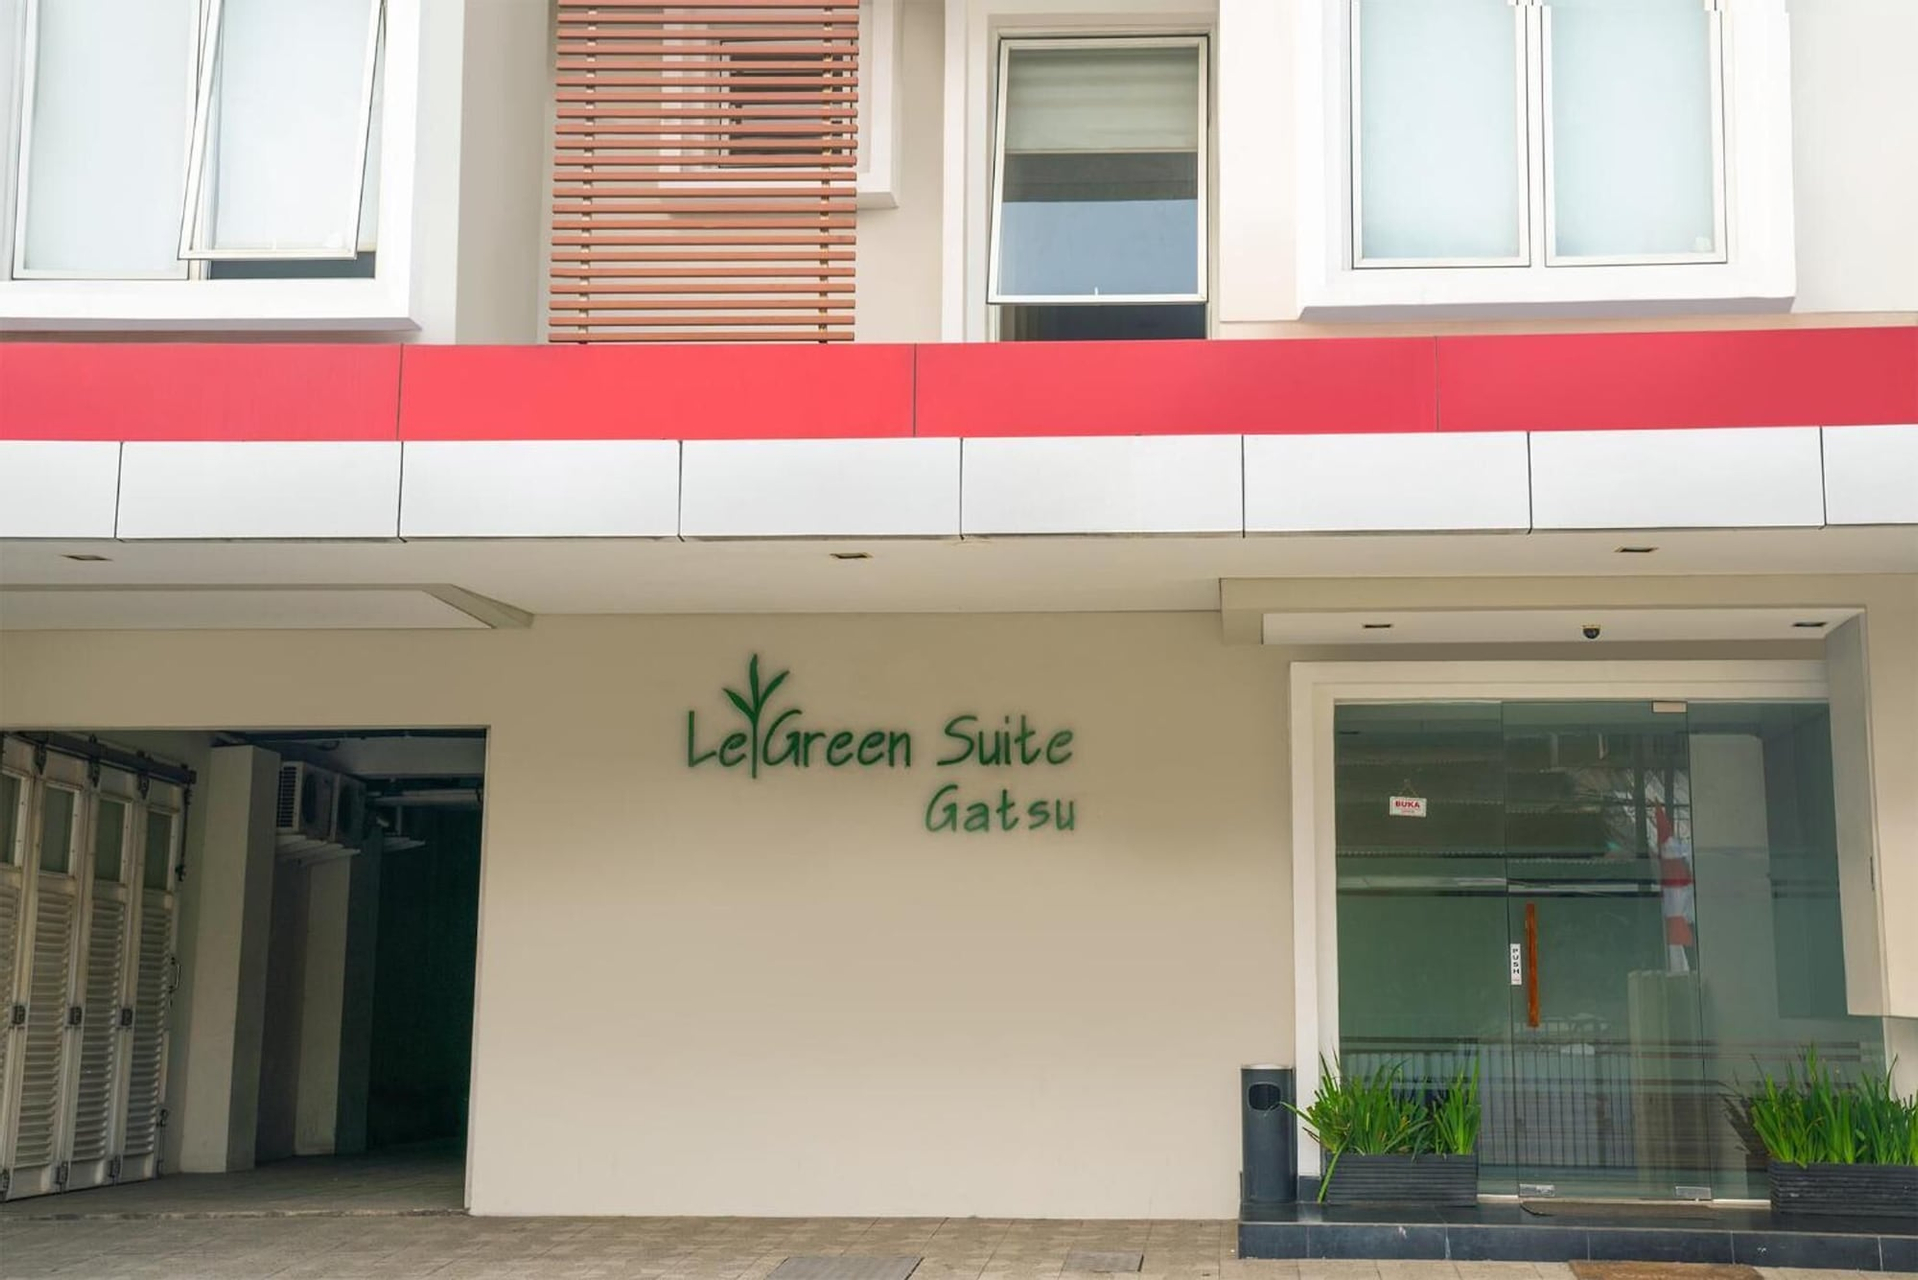 Exterior & Views 2, LeGreen Suite Gatot Subroto, Jakarta Pusat